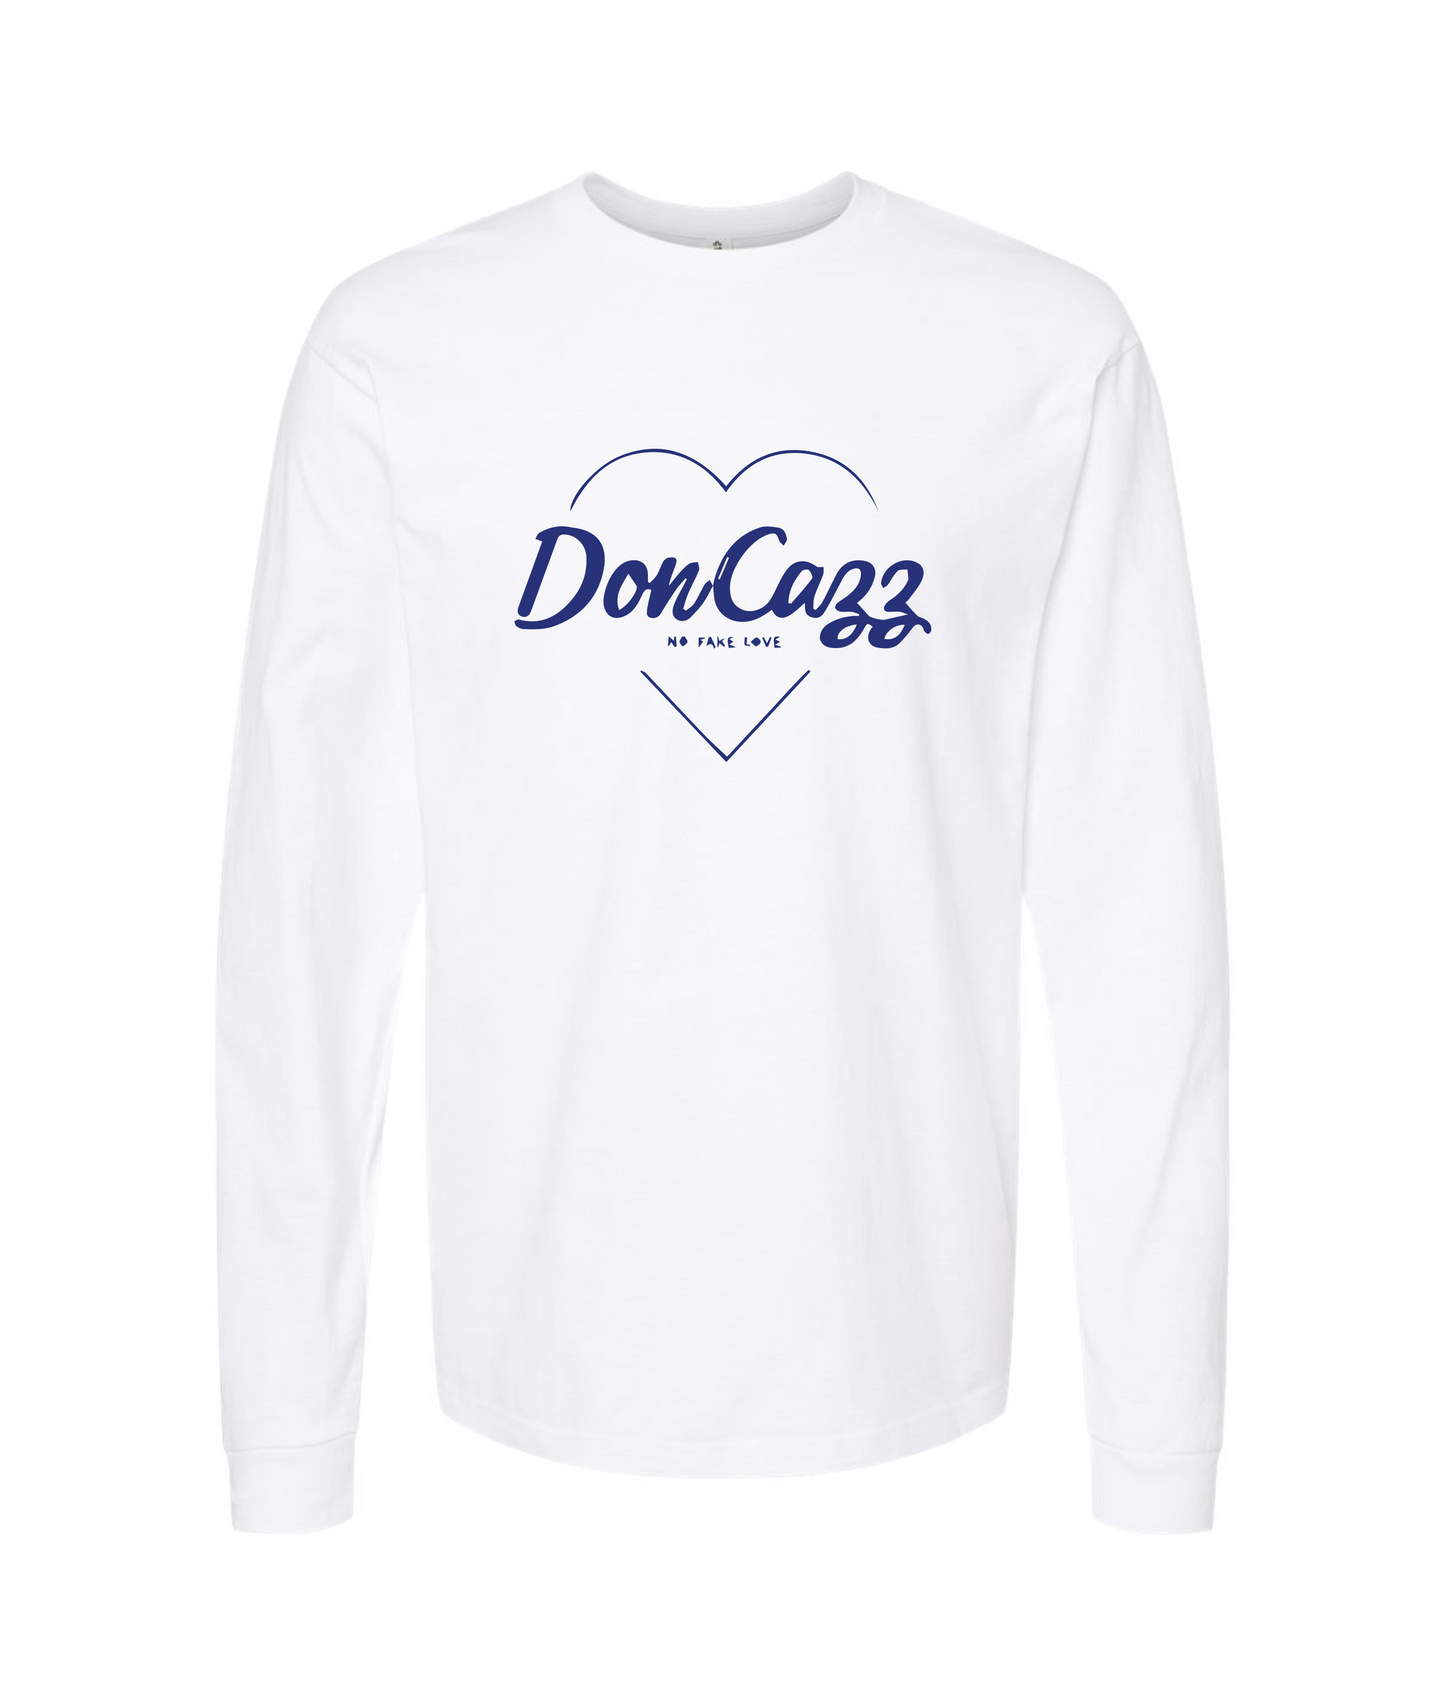 Don Cazz - No Fake Love - White Long Sleeve T